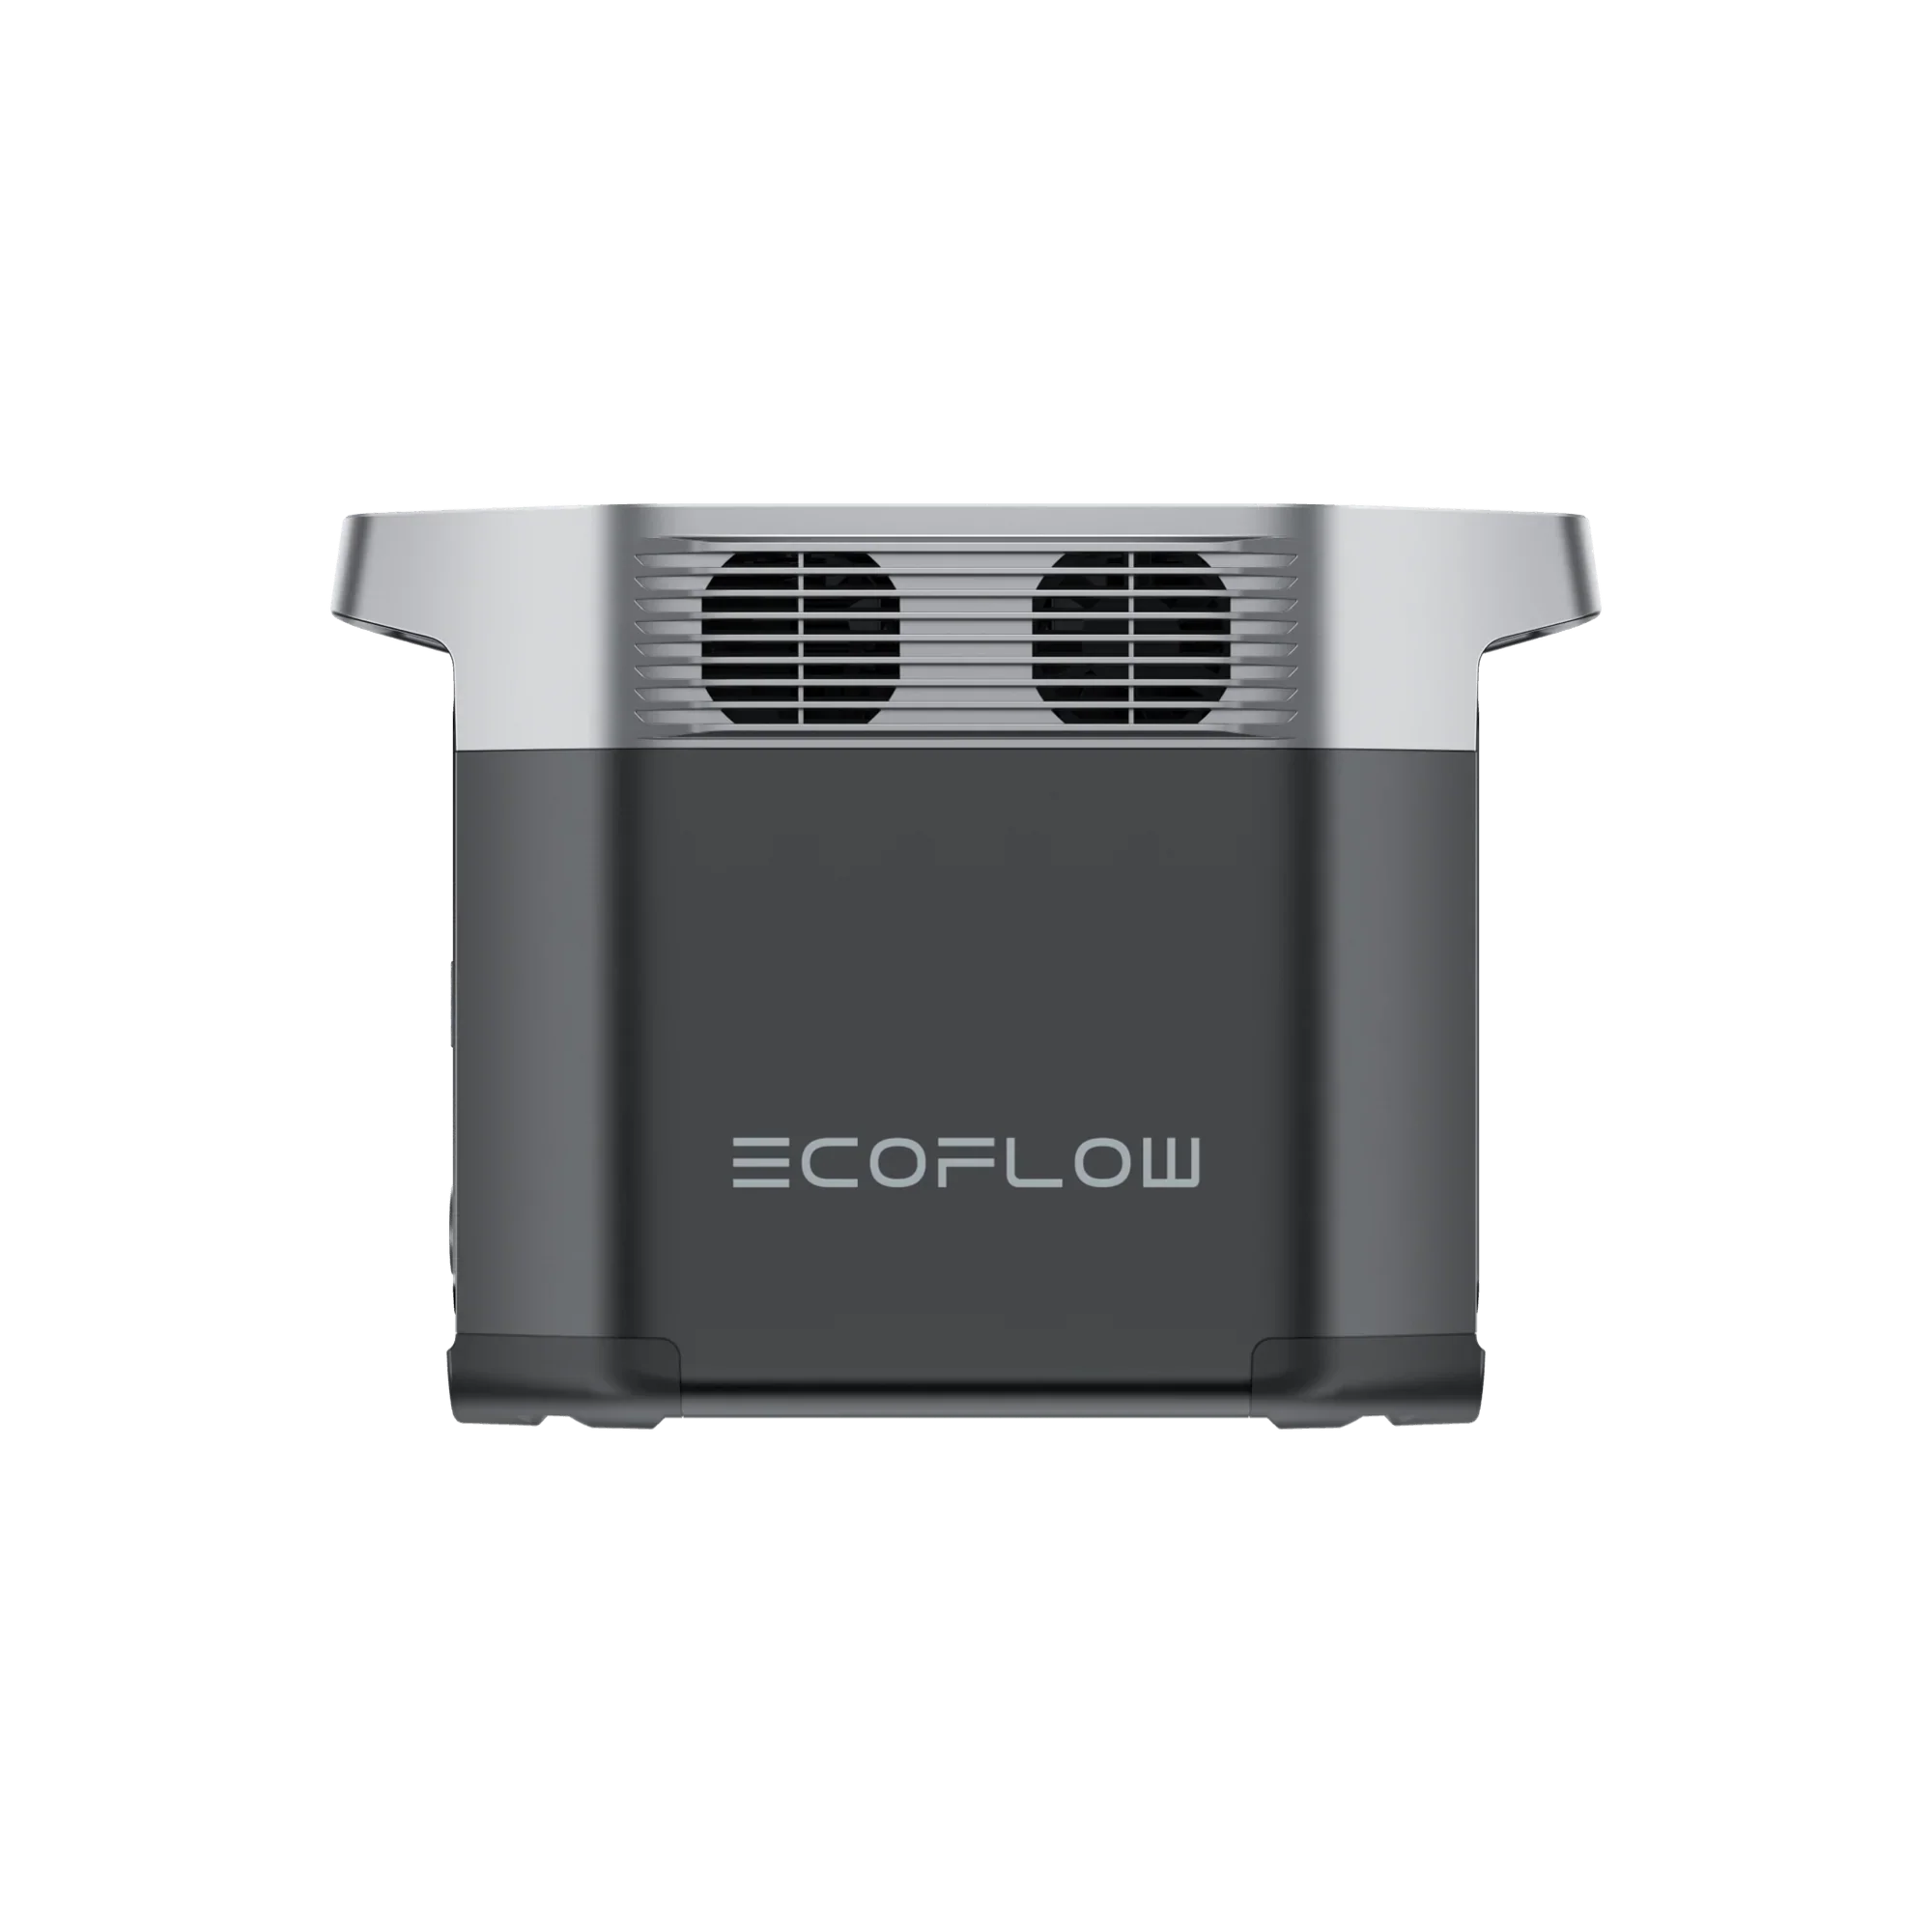 EcoFlow DELTA 2 Portable Power Station - EcoFlow Power Systems